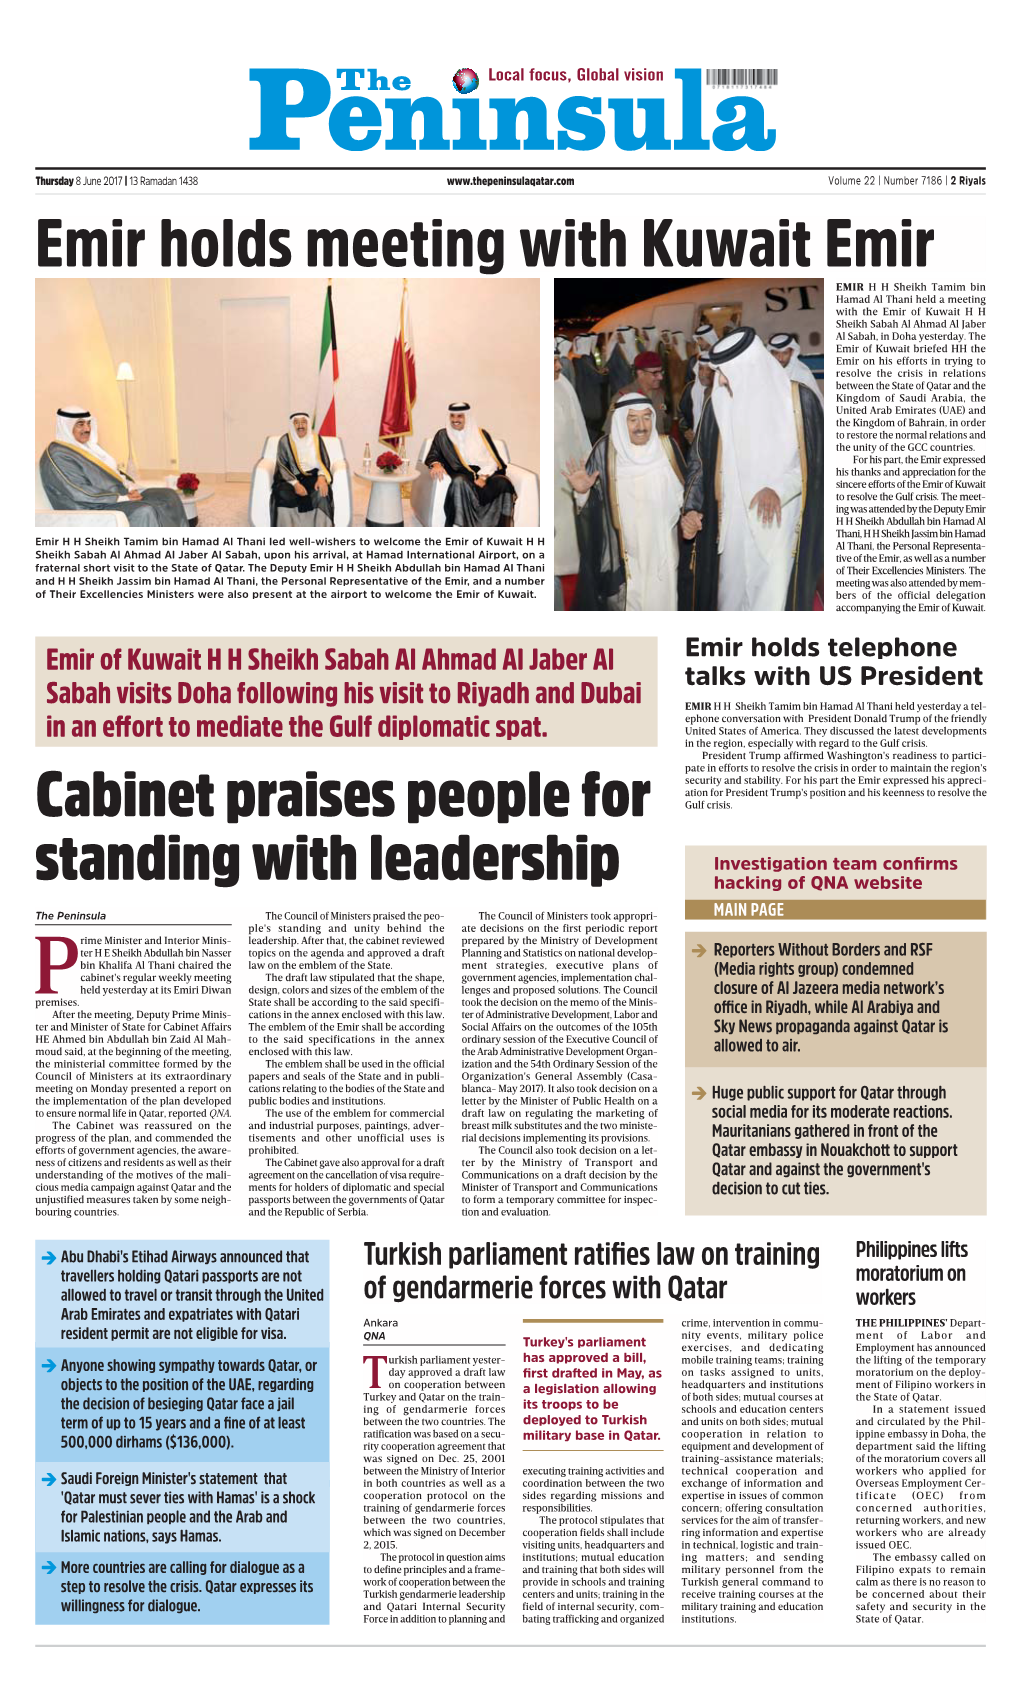 Emir Holds Meeting with Kuwait Emir